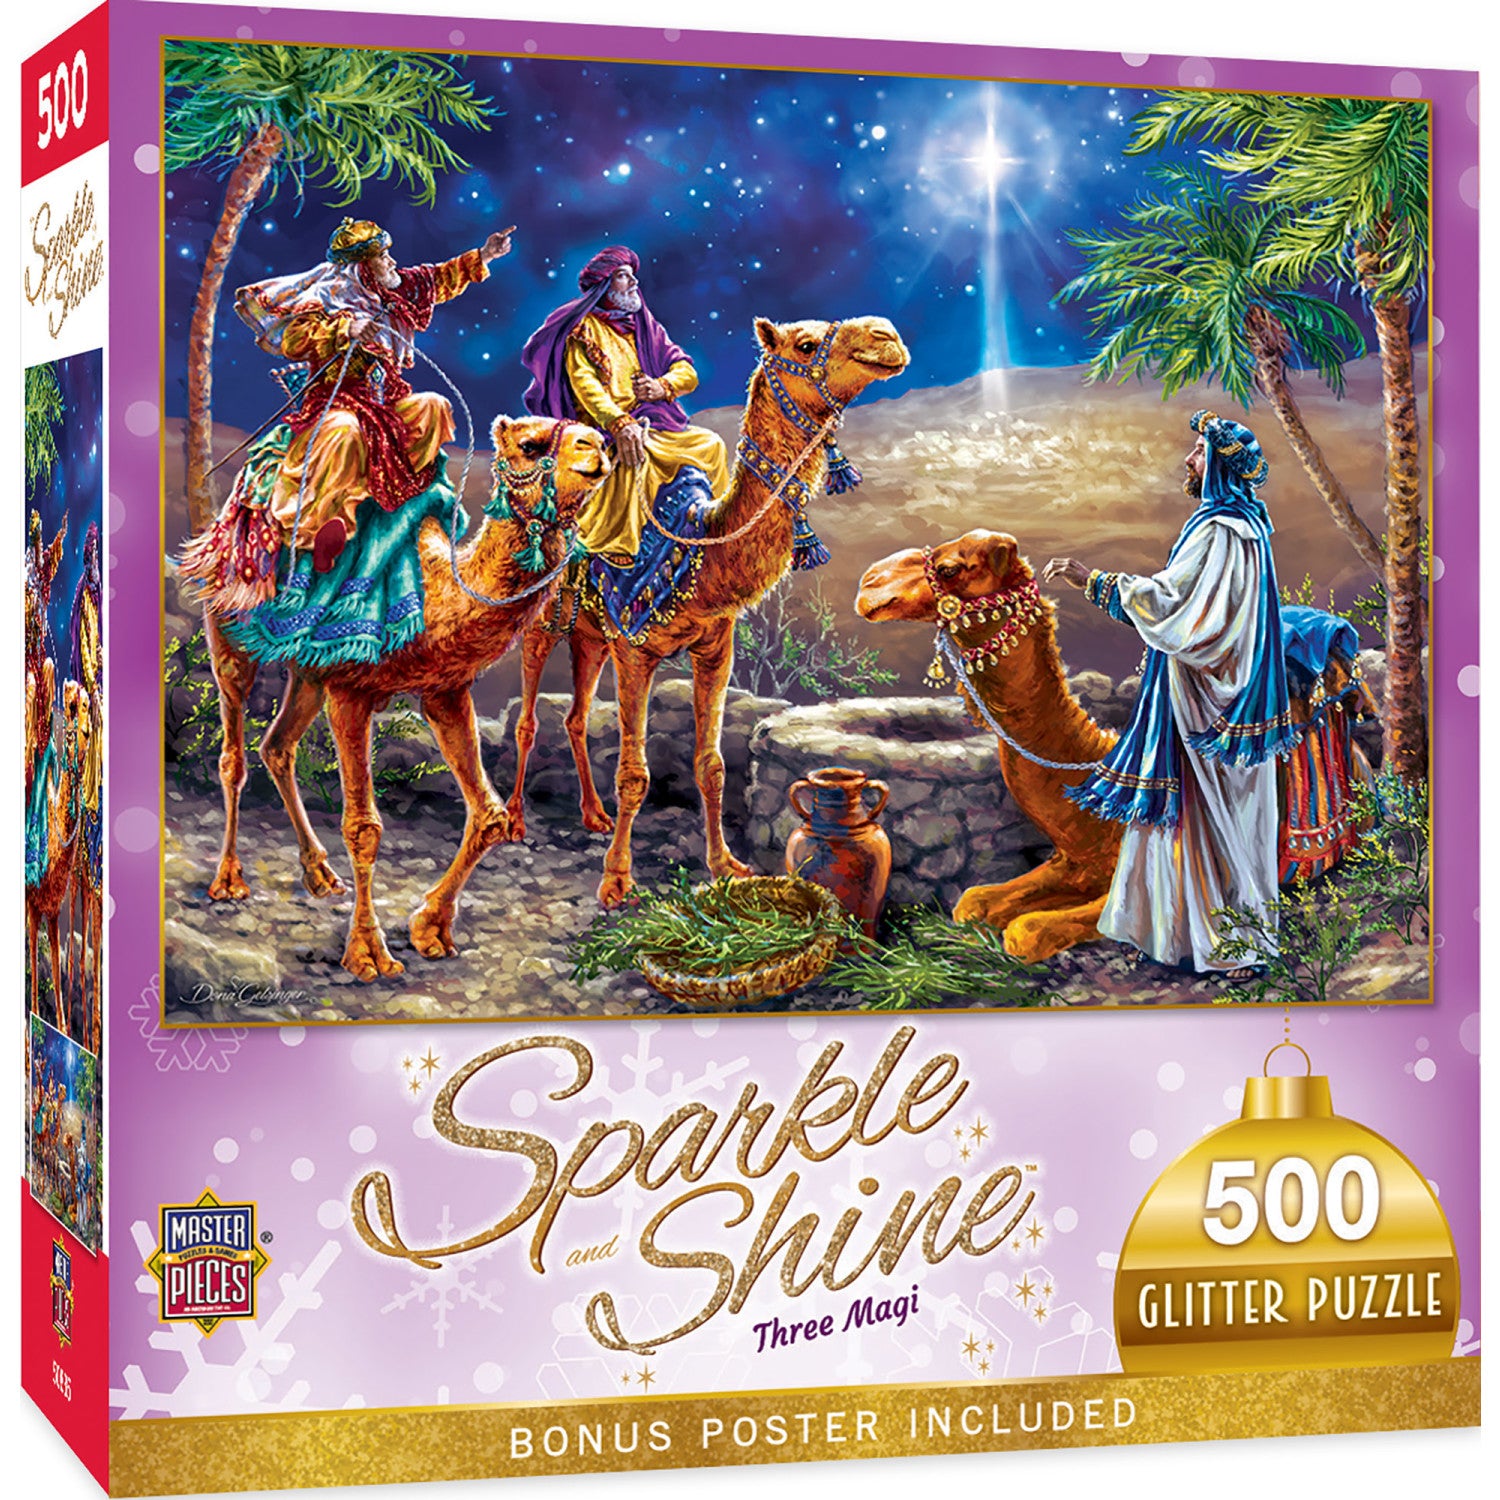 Sparkle & Shine - Three Magi 500 Piece Glitter Jigsaw Puzzle